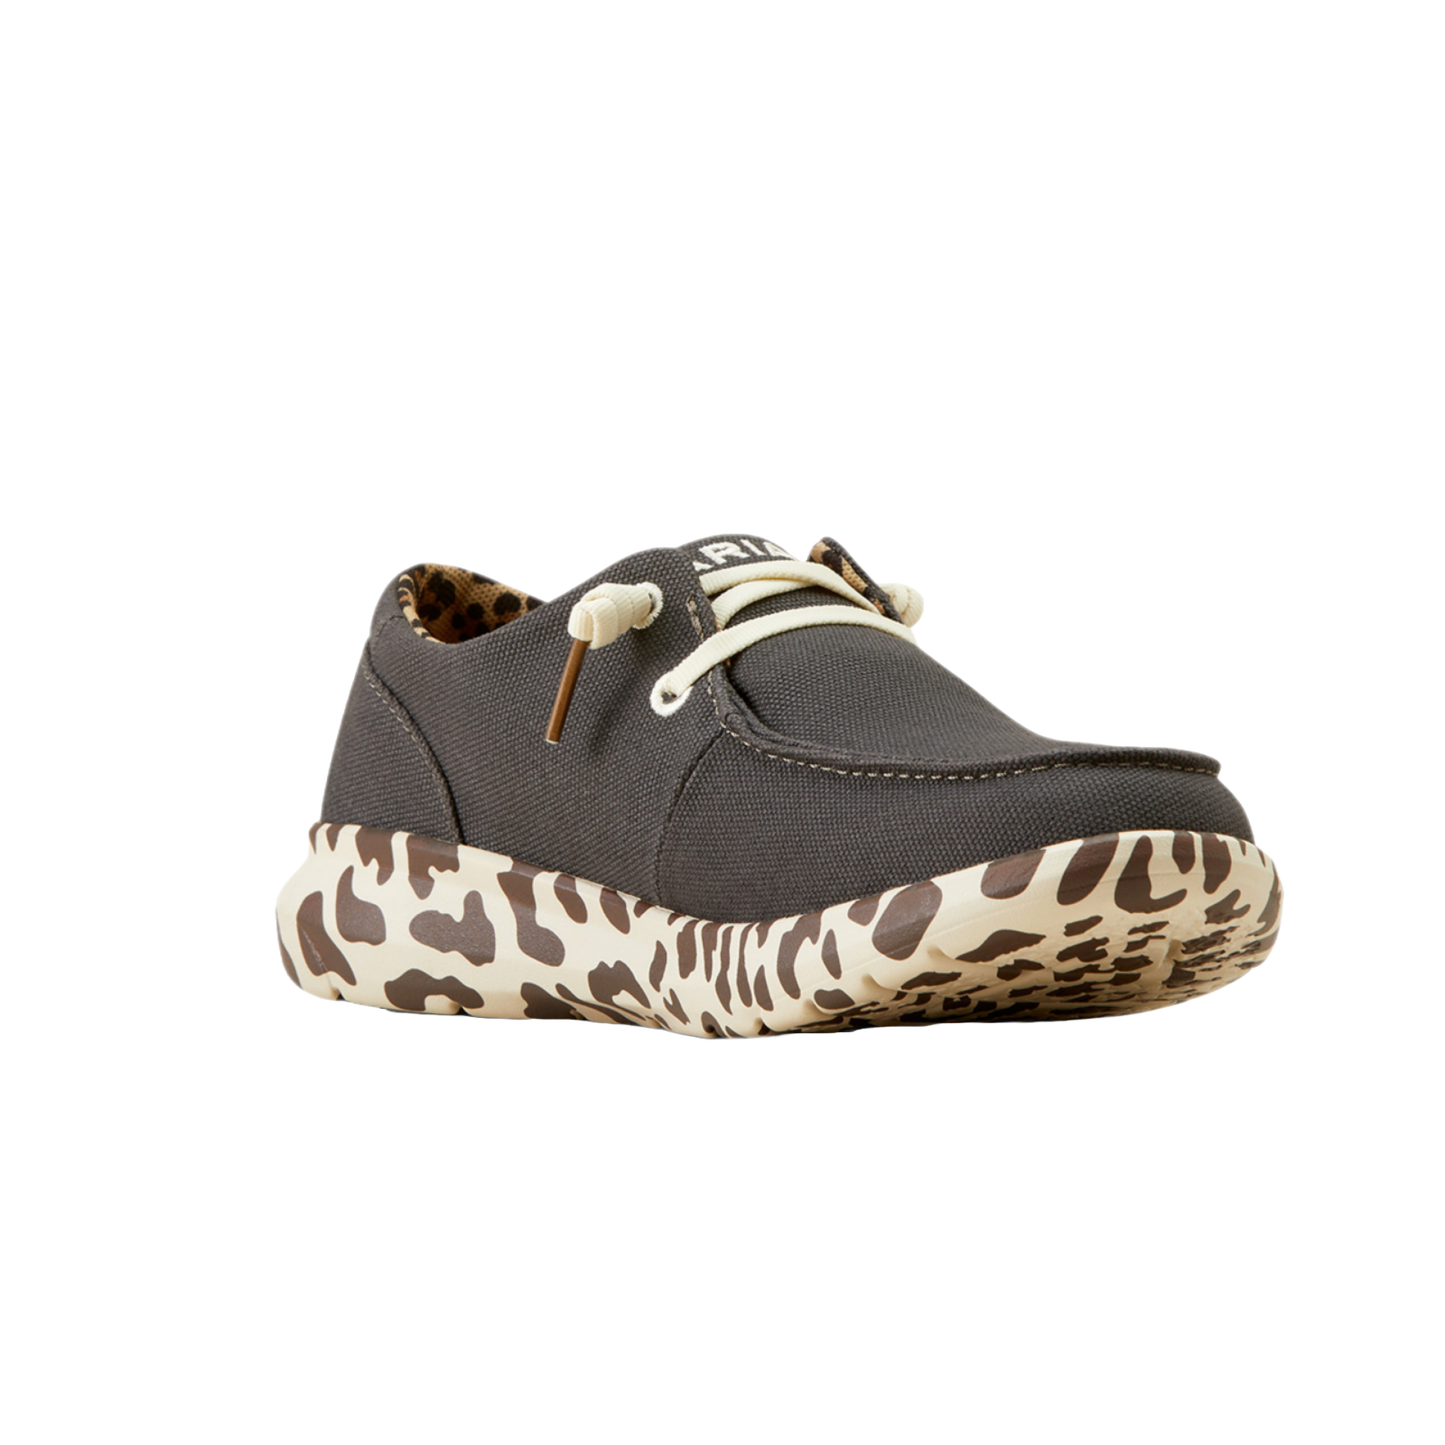 Ariat Ladies Hilo Charcoal Leopard Slip On Shoes 10050925